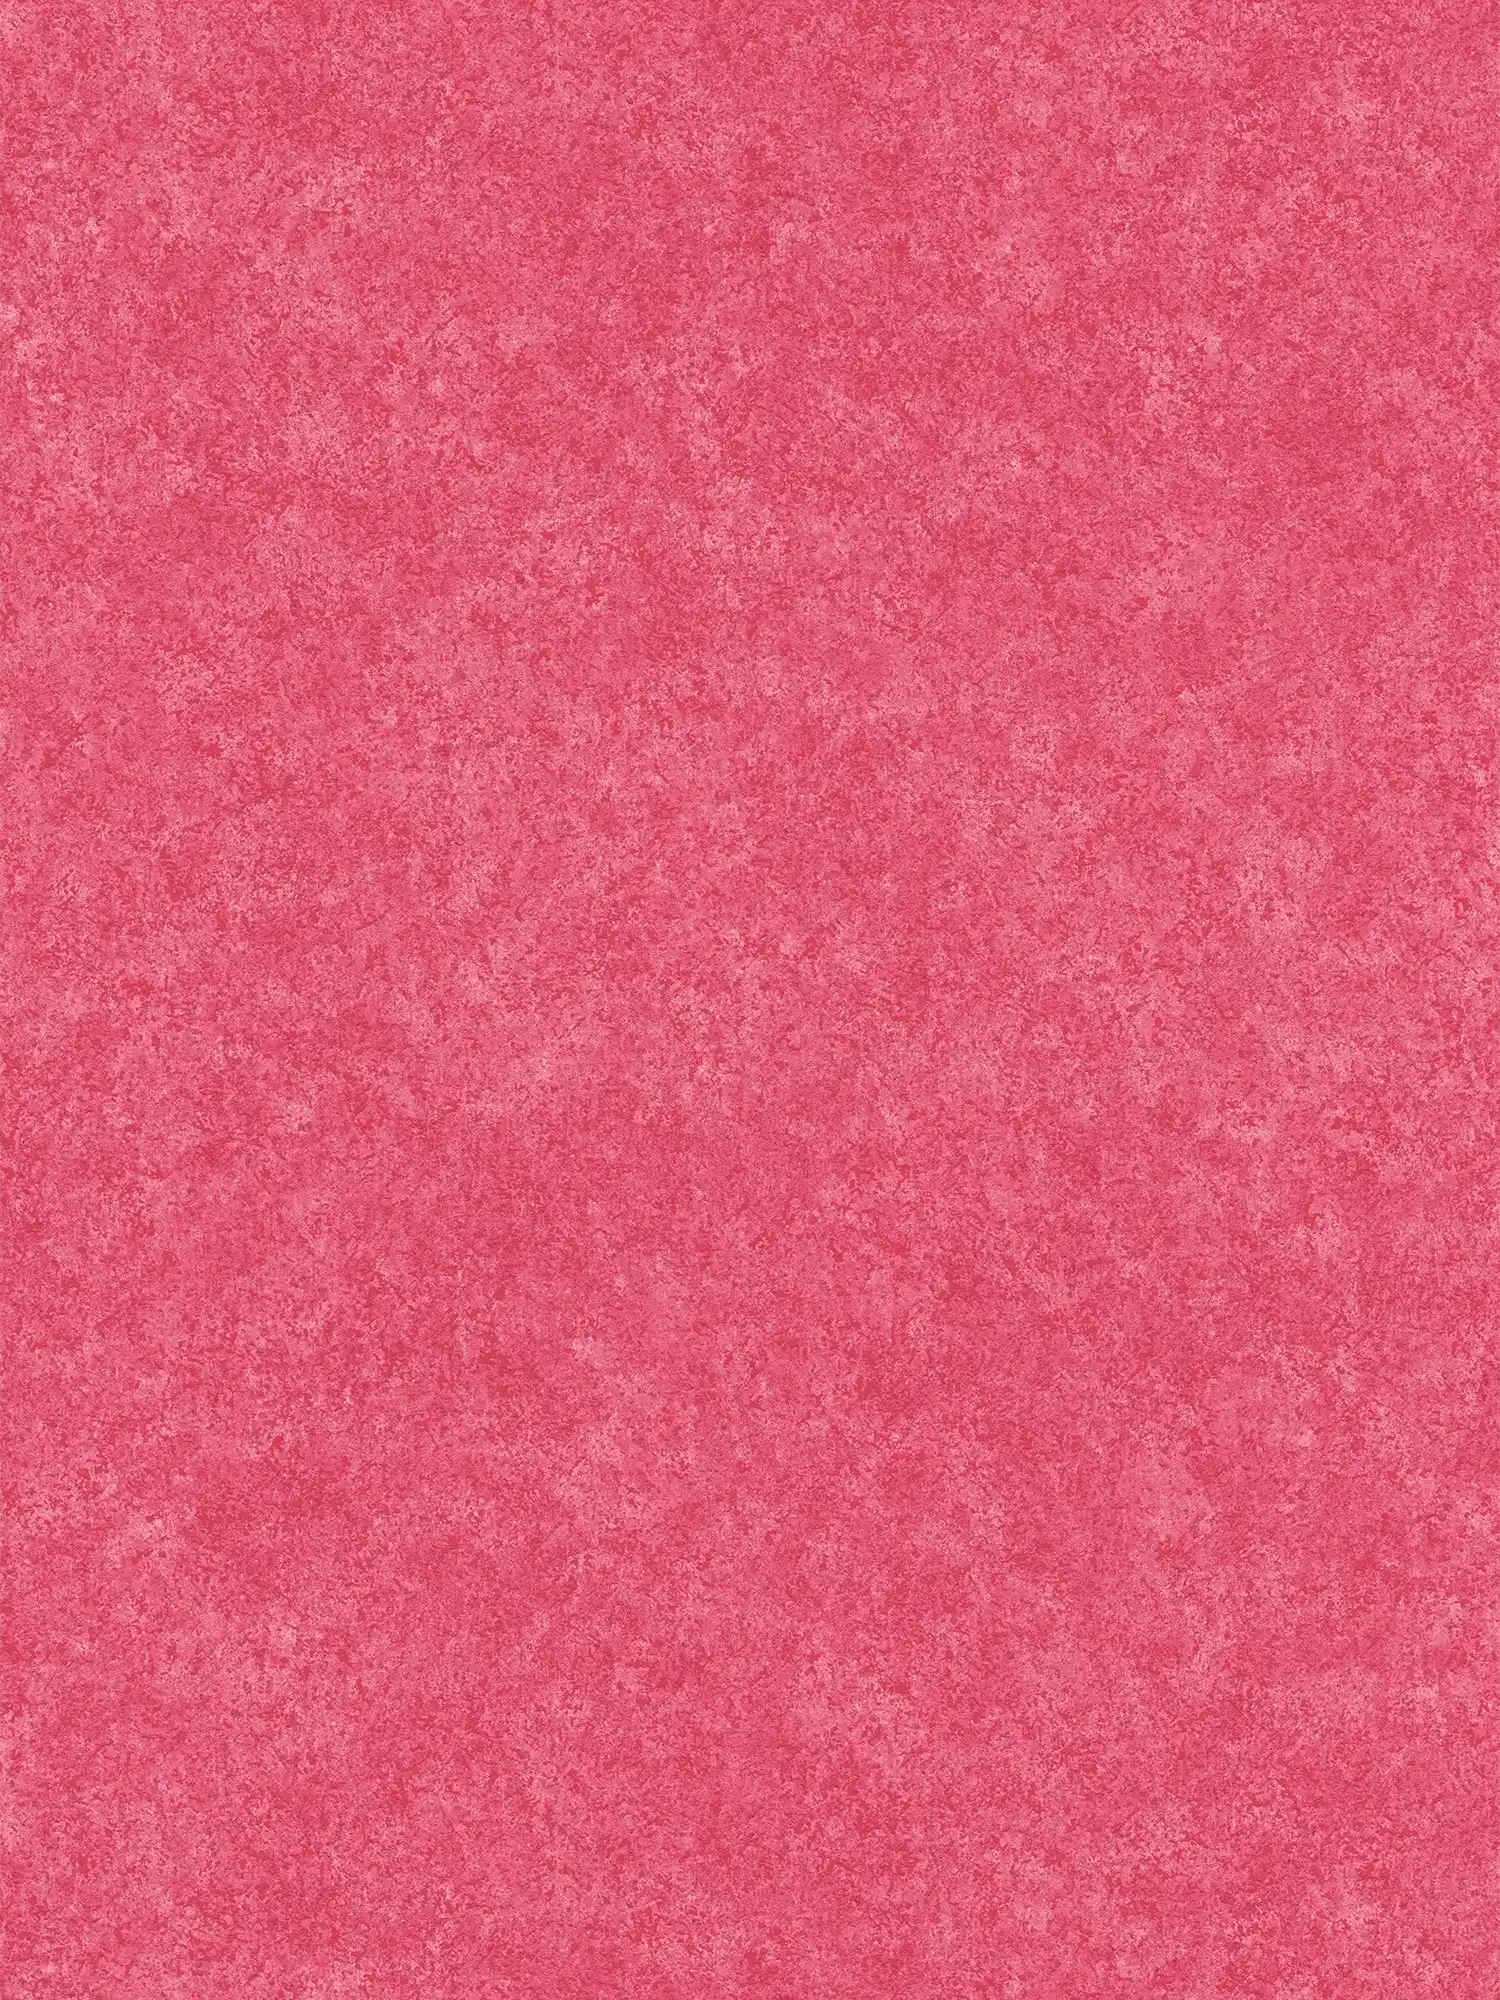 Papel pintado no tejido rosa con aspecto de yeso moteado - rojo
